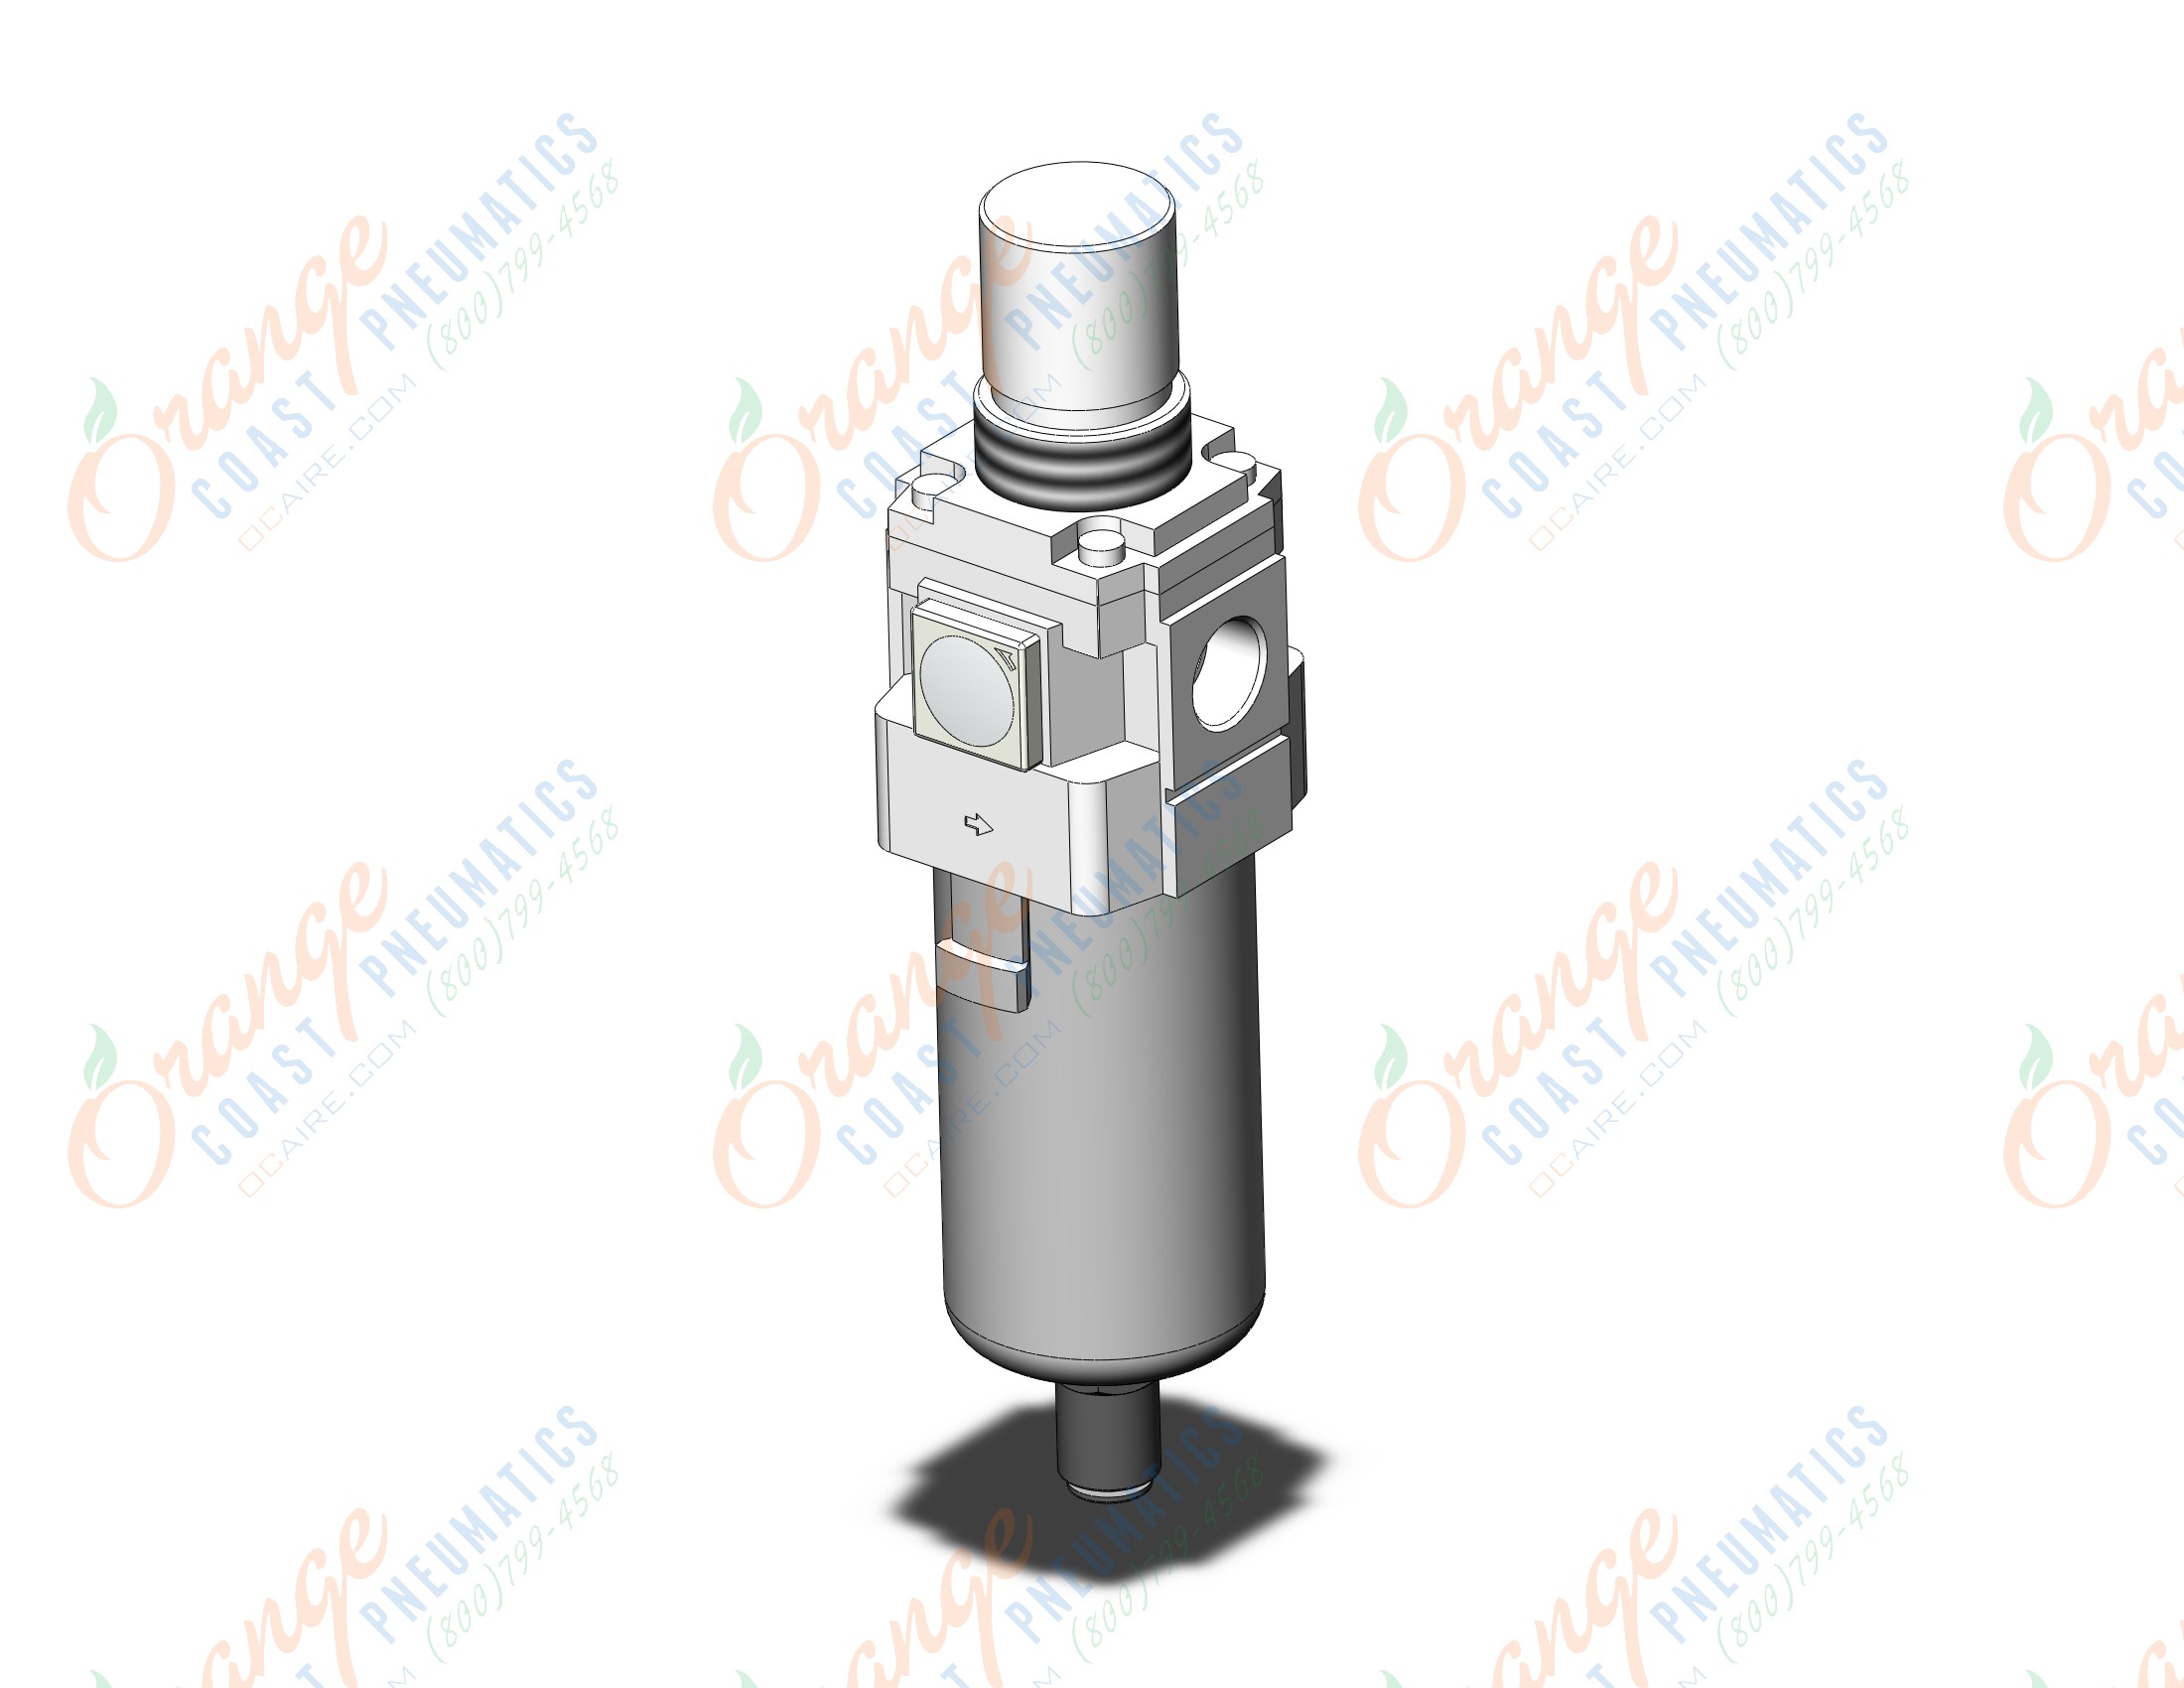 SMC AW40K-N04CEH-Z-B filter/regulator, FILTER/REGULATOR, MODULAR F.R.L.